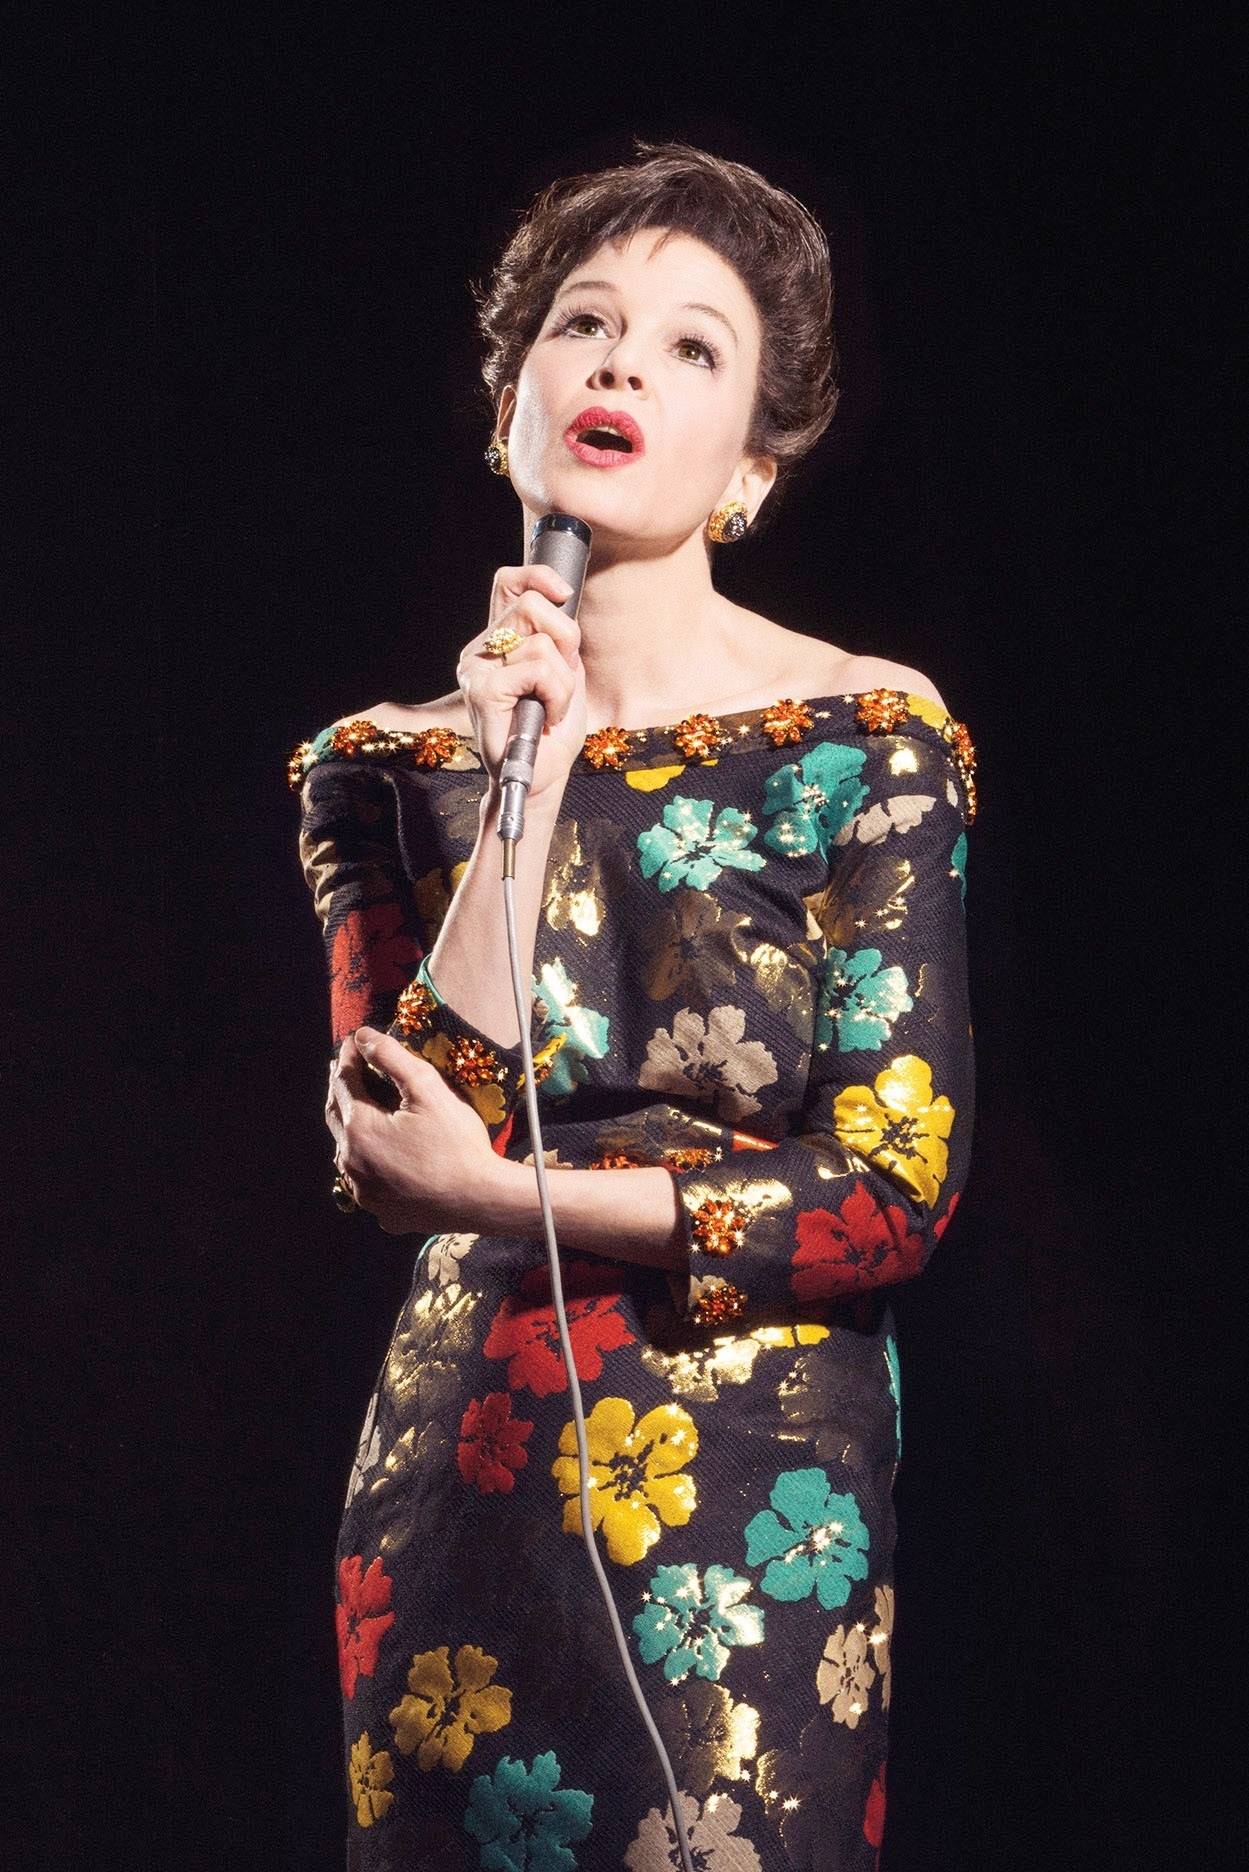 Zellweger singing in a floral dress